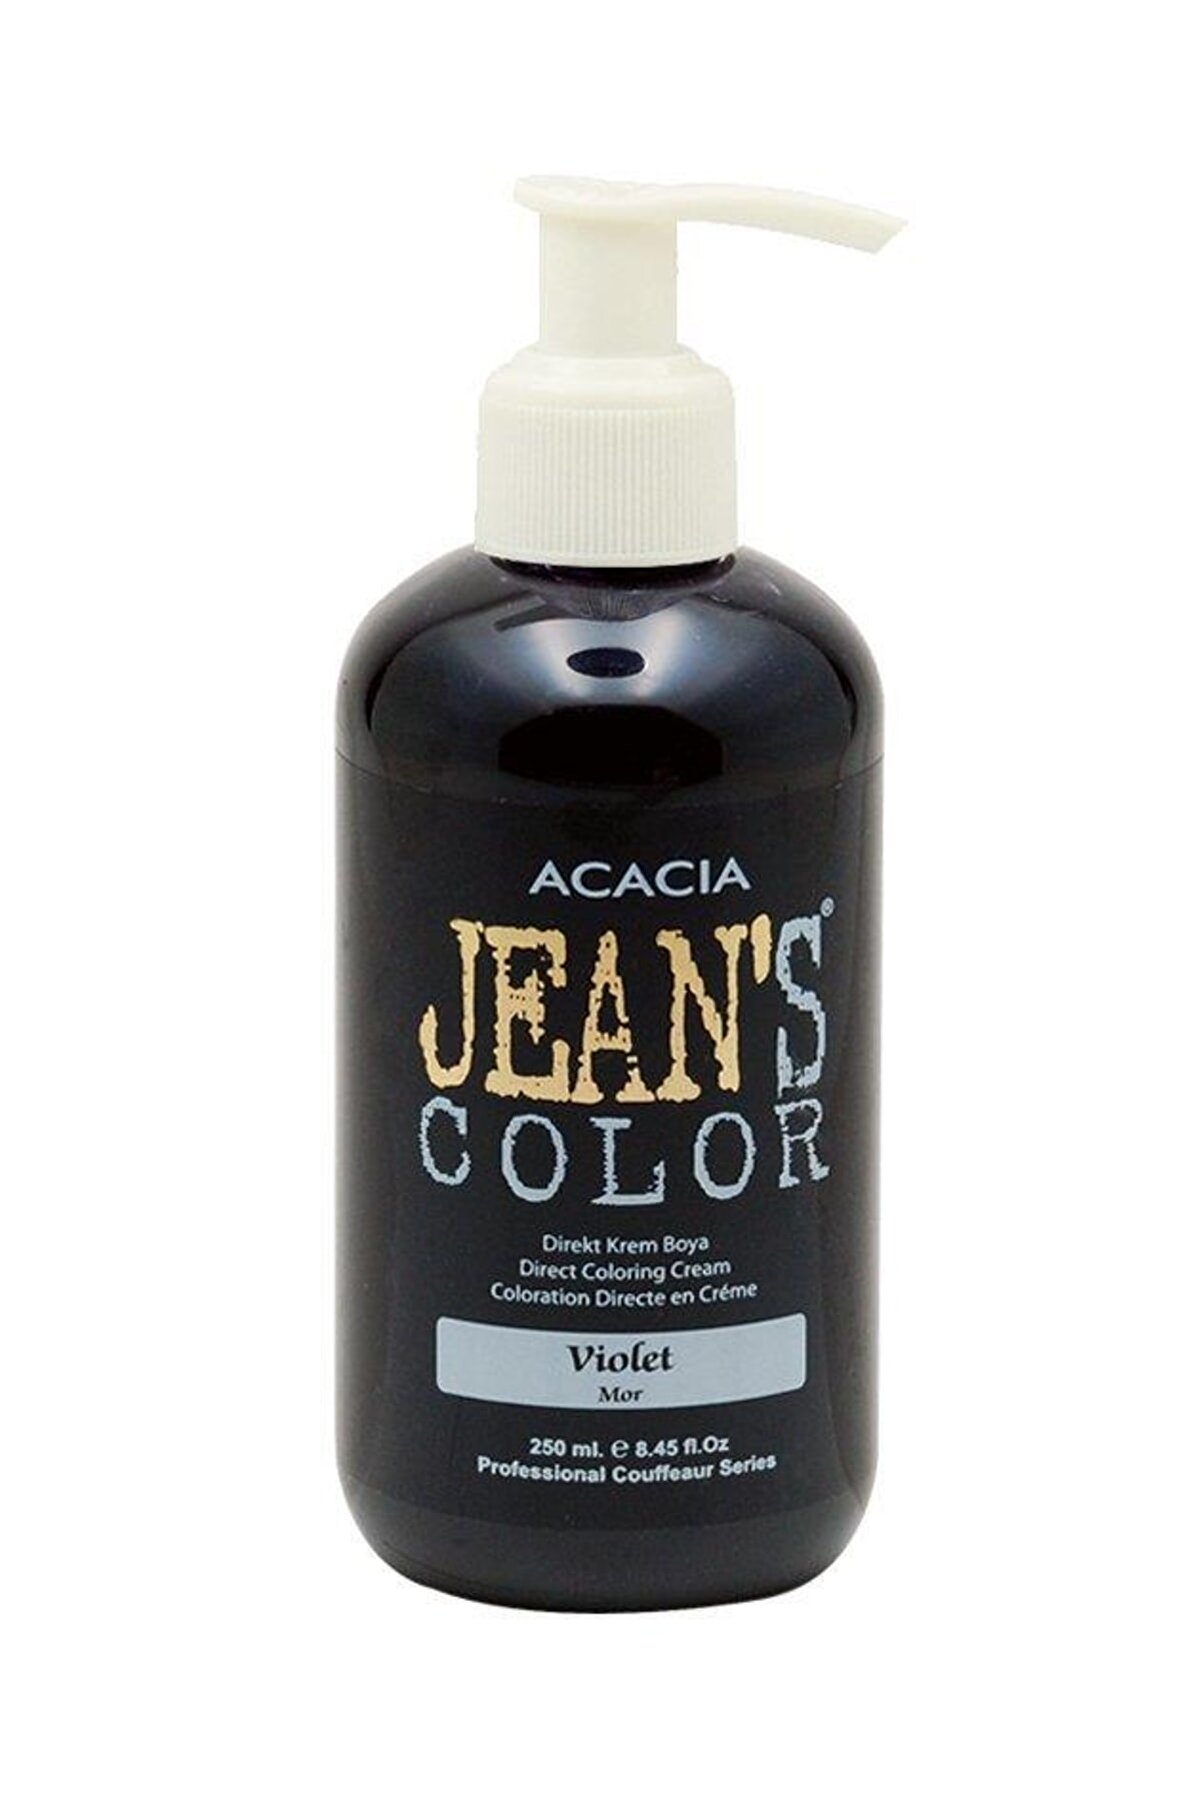 Acacia Jean's Color Saç Boyası Mor 250 ml